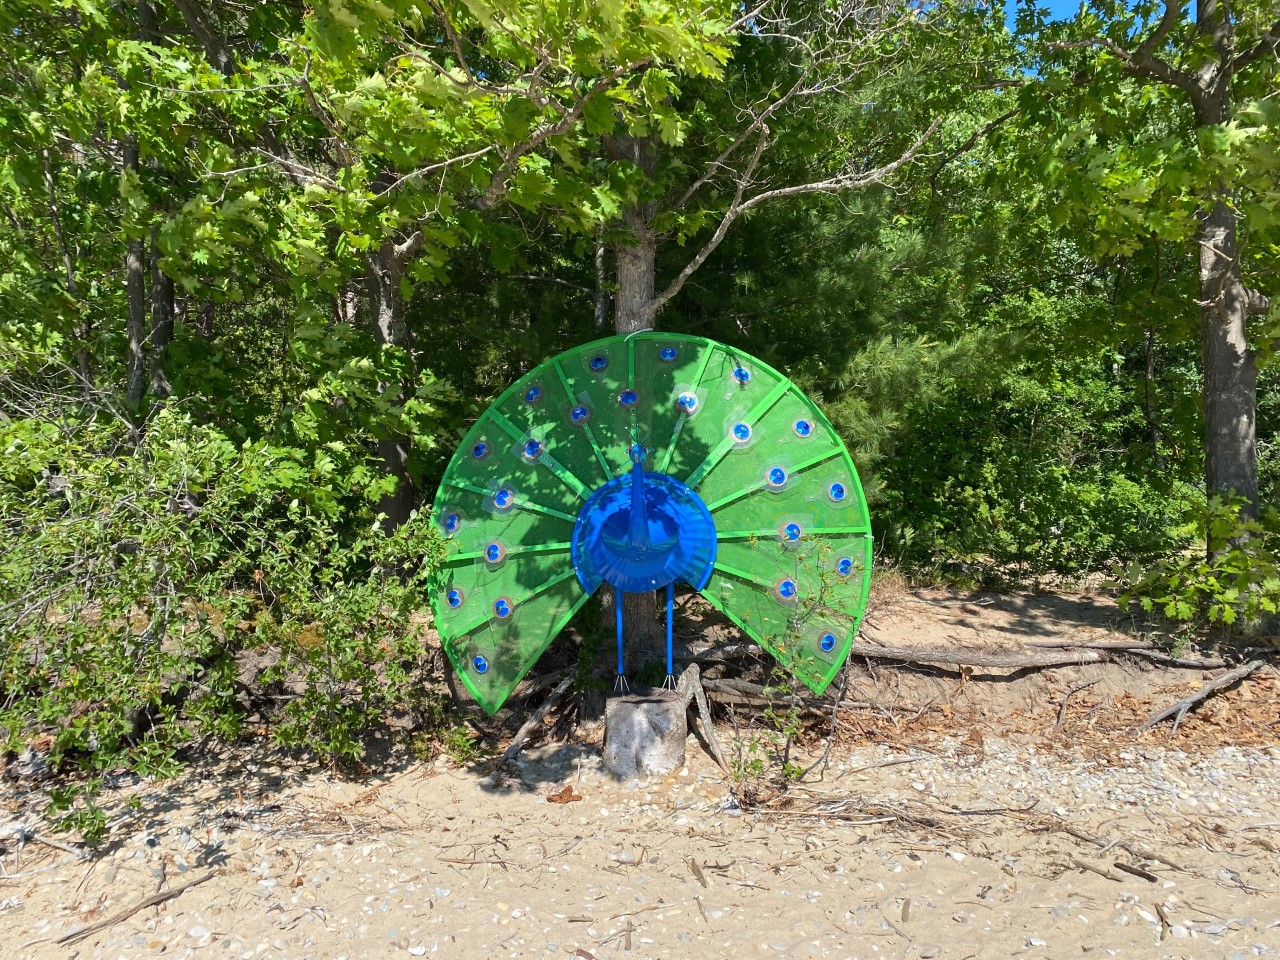 Peacock on the beach (no info)